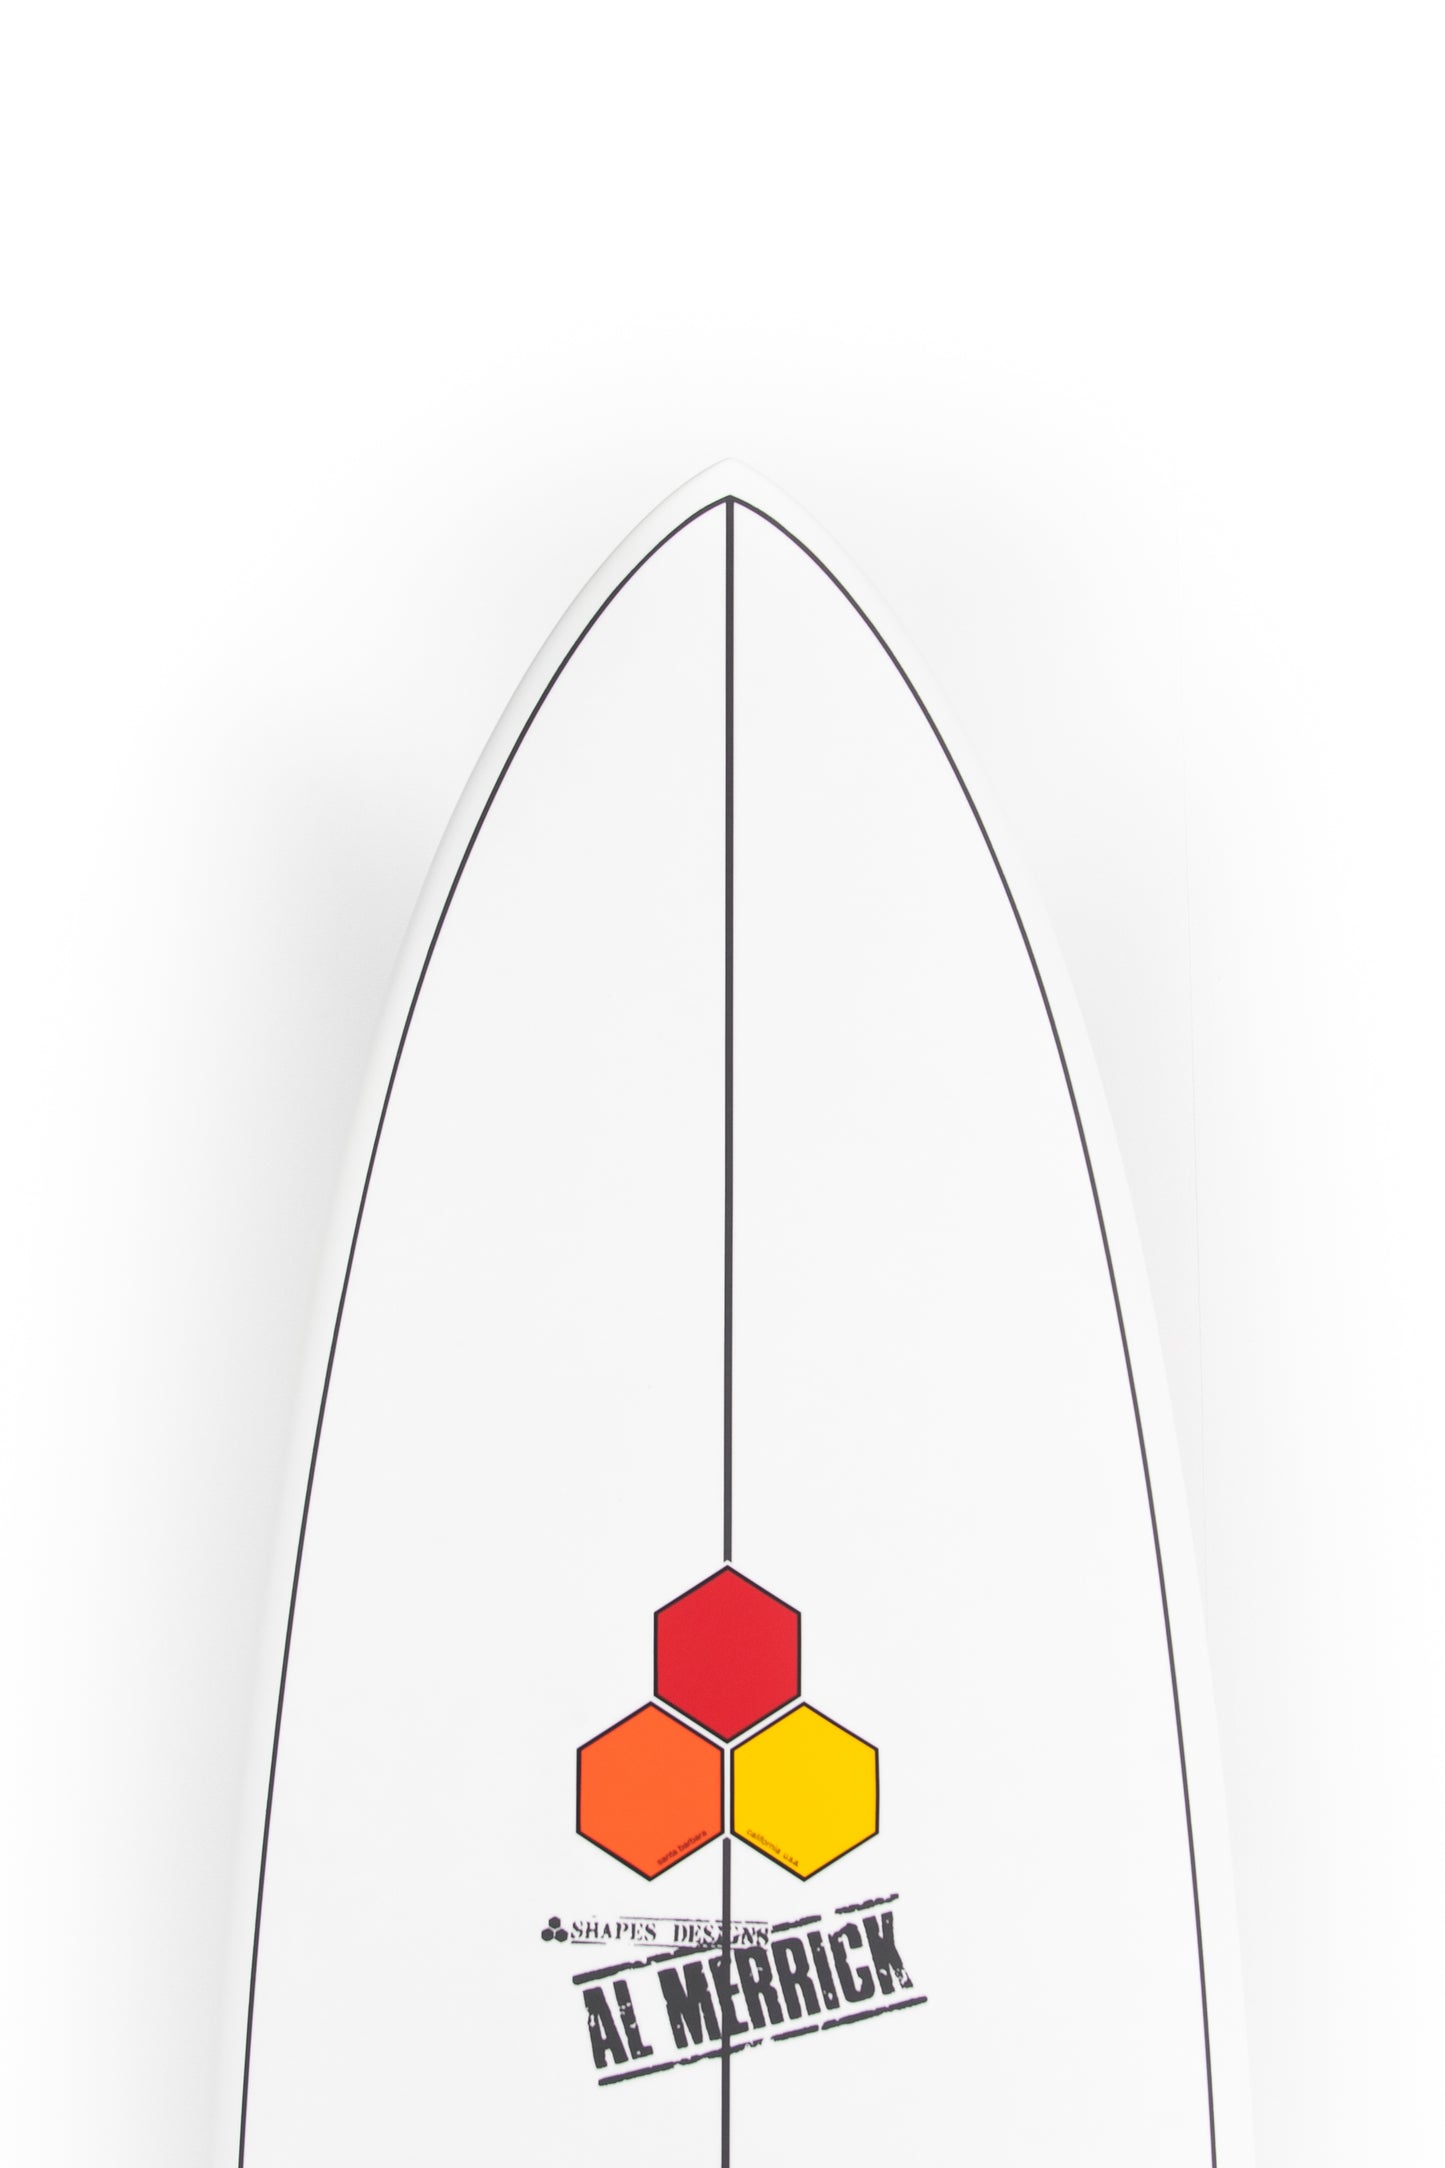 
                  
                    Pukas-Surf-Shop-Torq-Surfboards-M23-6_8
                  
                